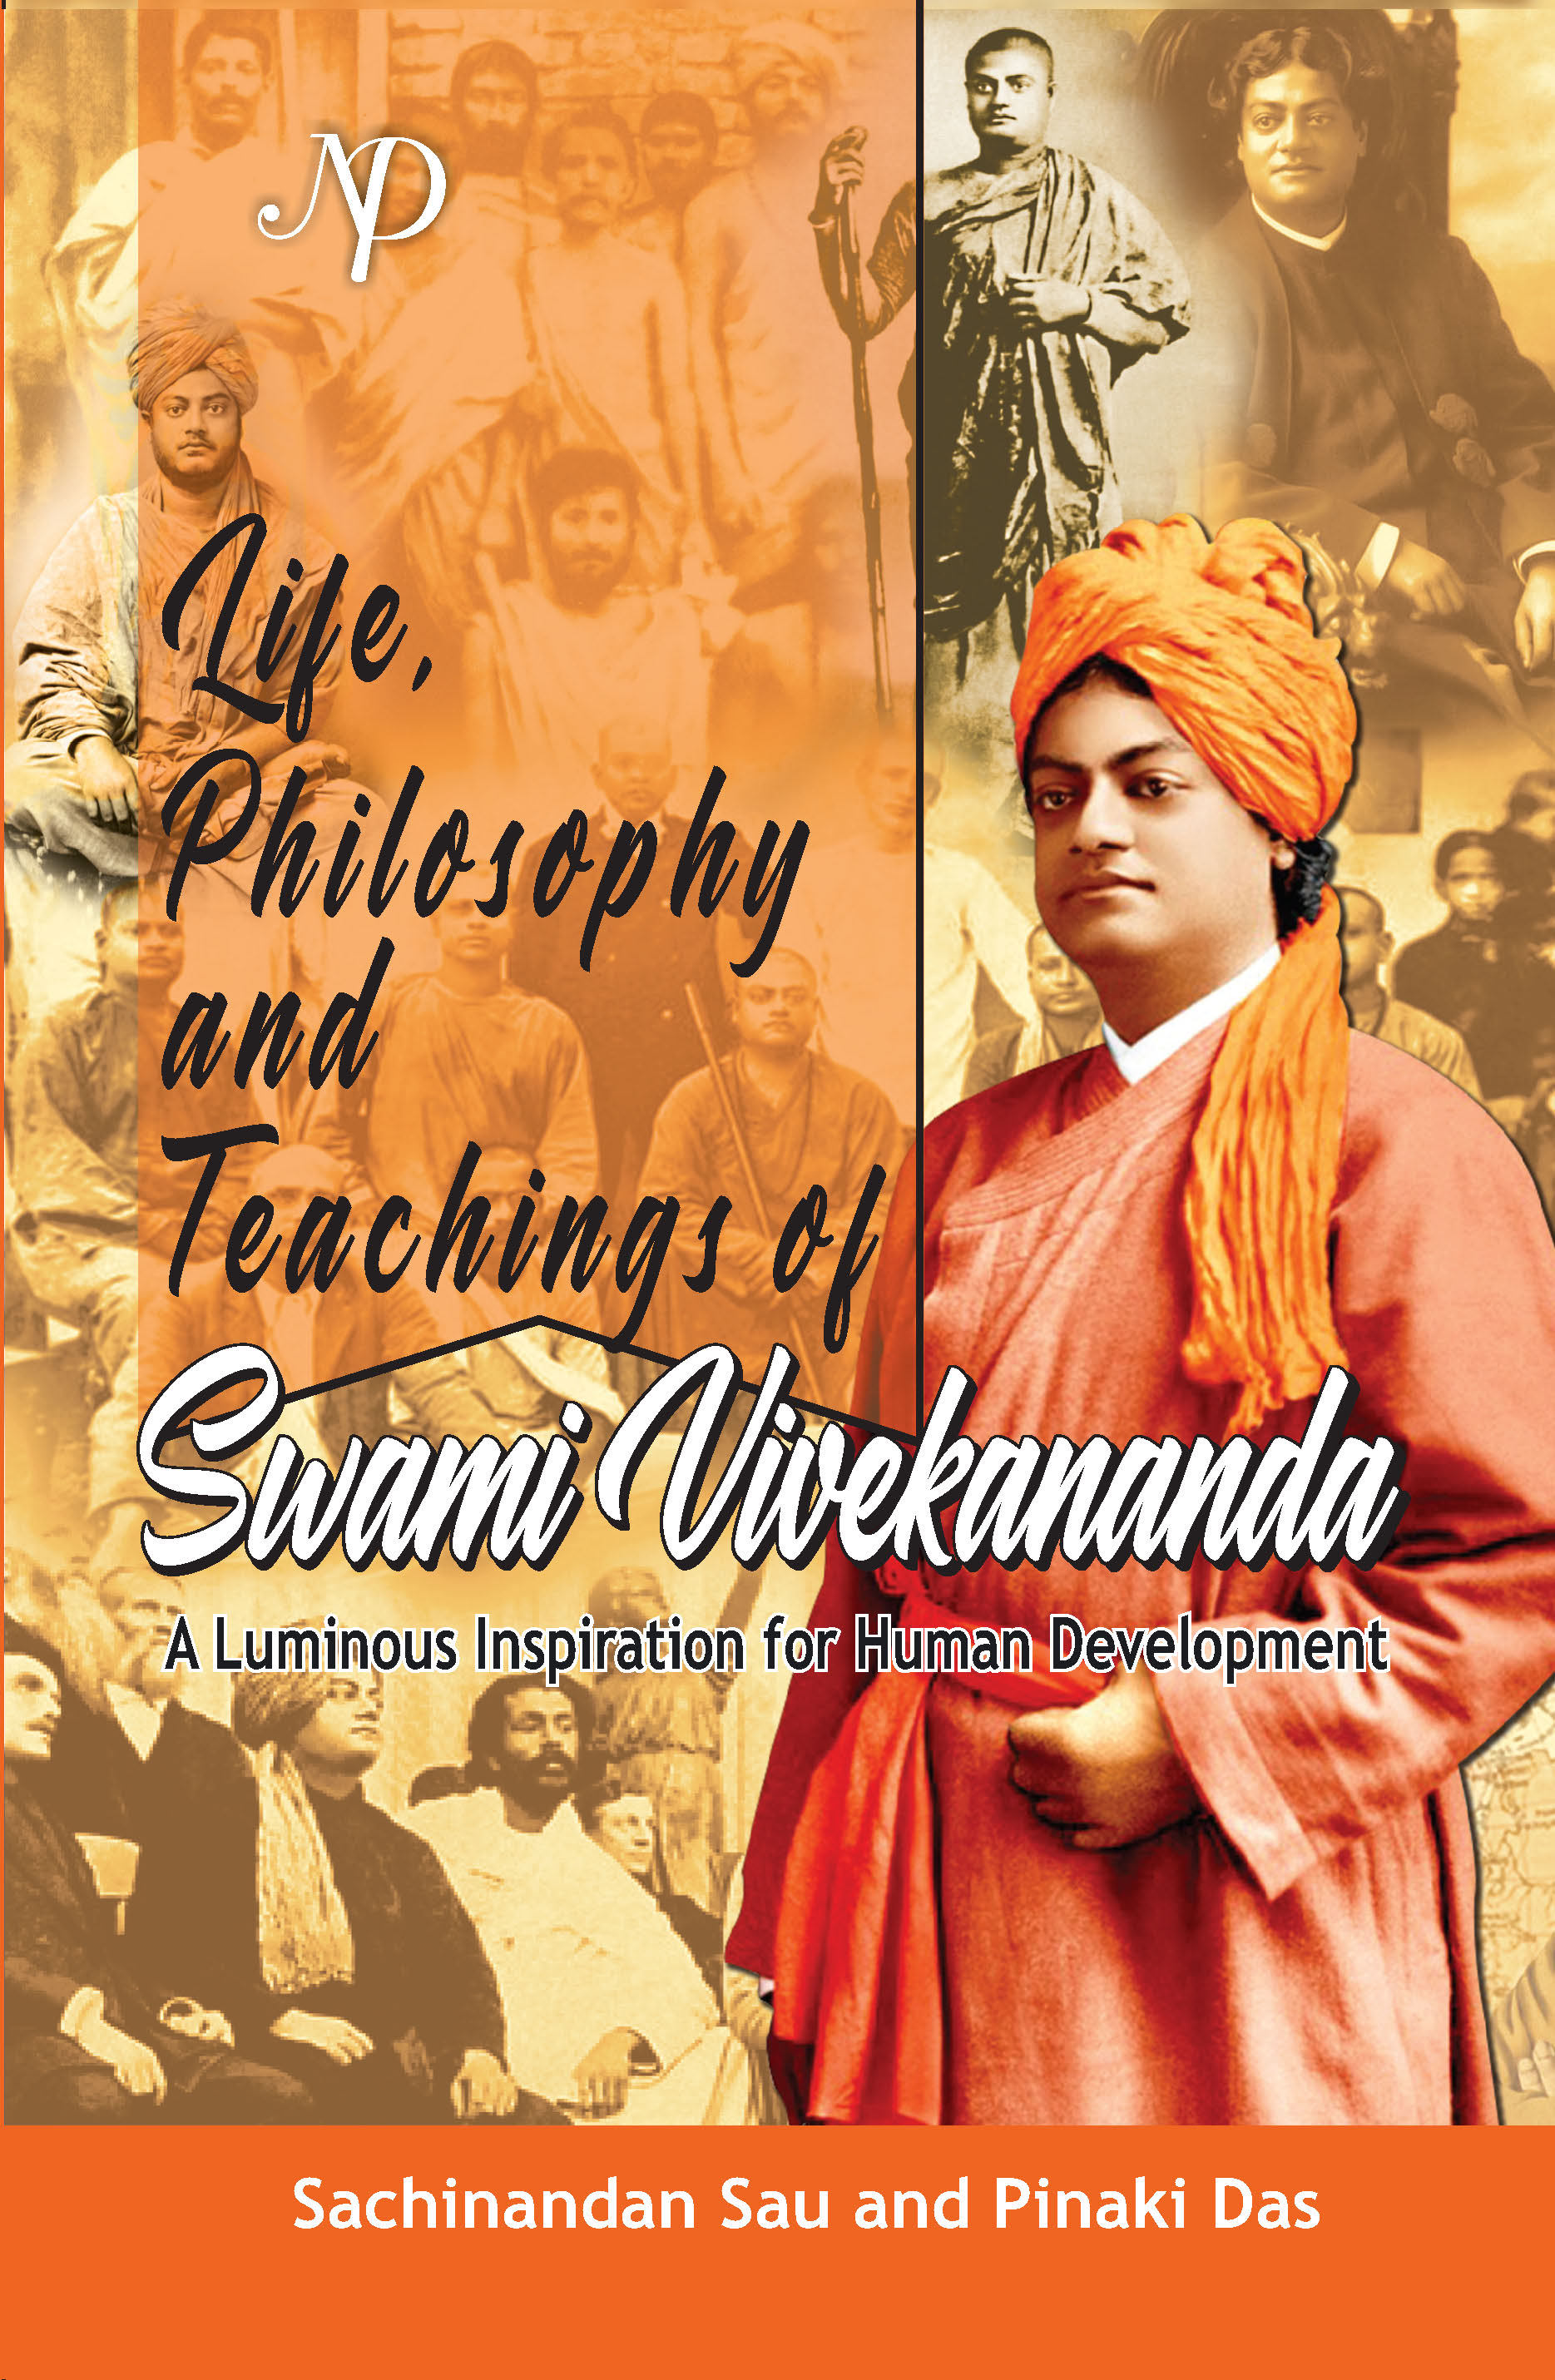 Life, Philosophy and Teaching of Swami Vivekananda Cover New.jpg